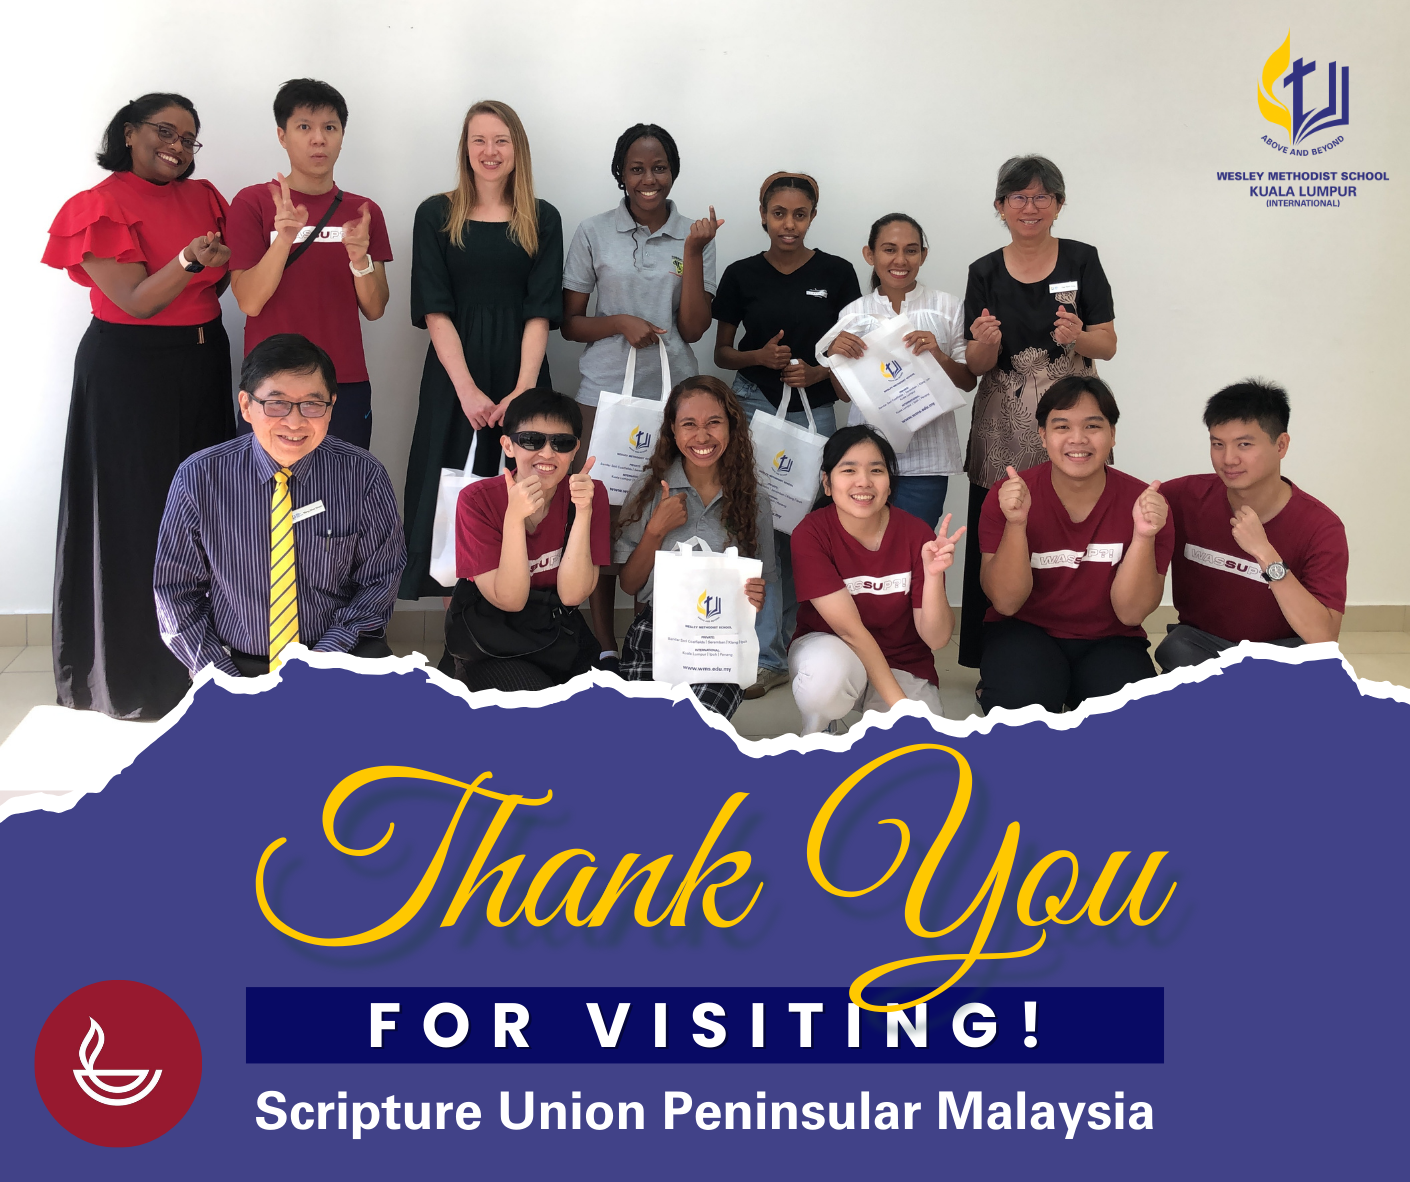 Visit from Scripture Union Peninsular Malaysia